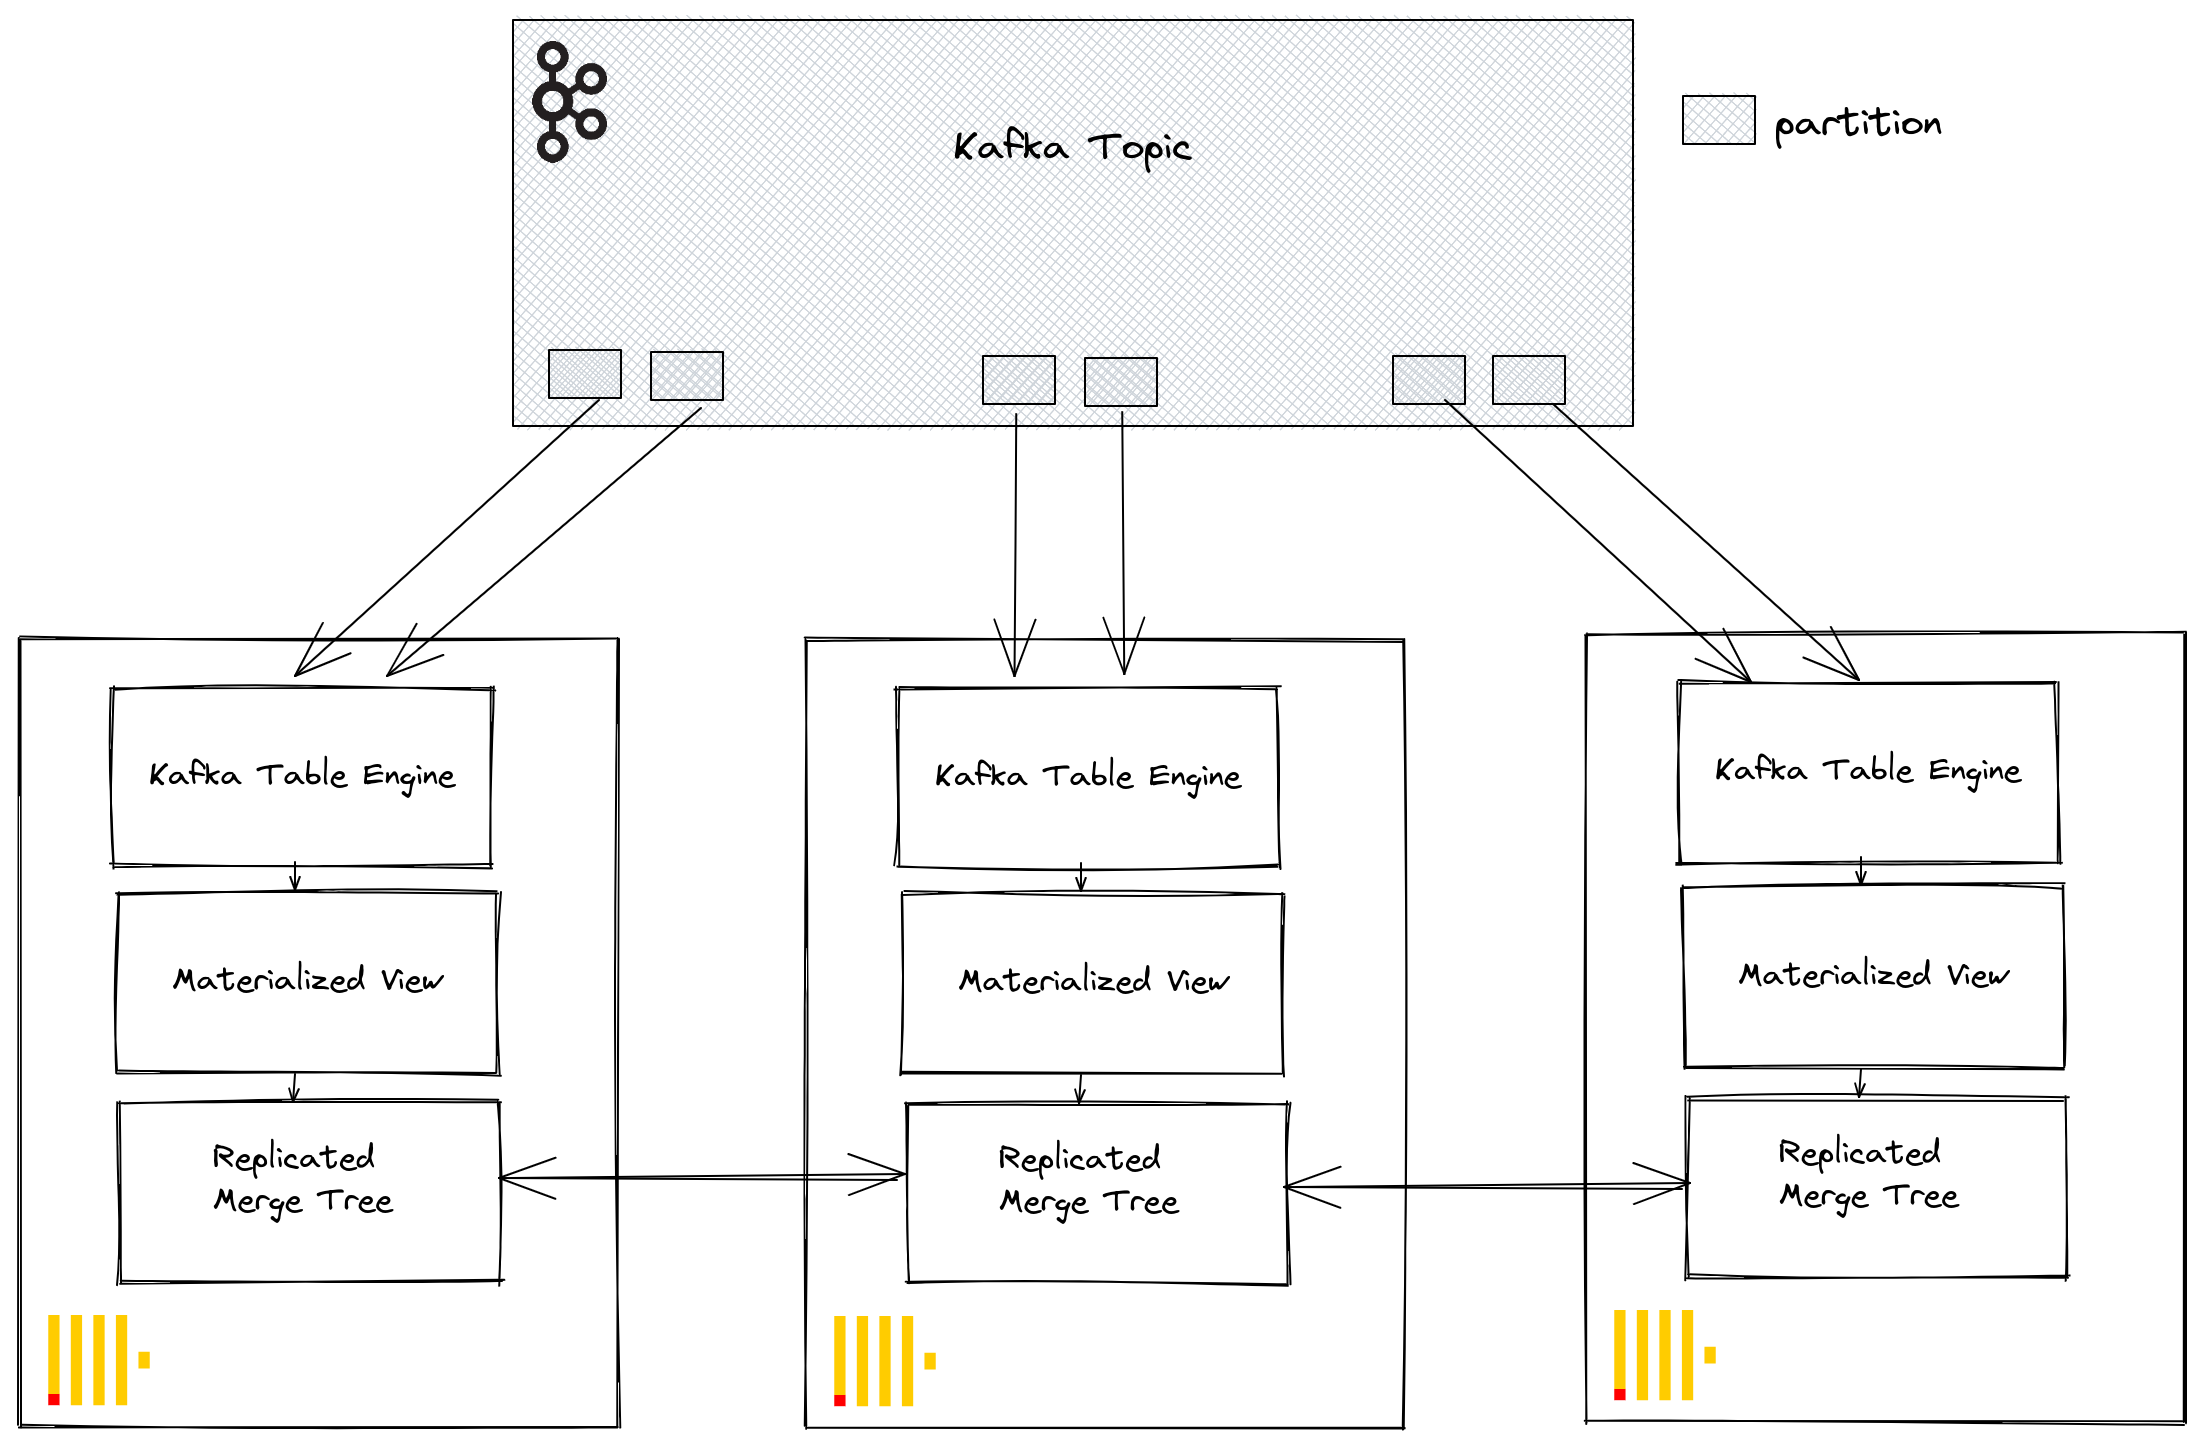 Replicated Kafka table engine